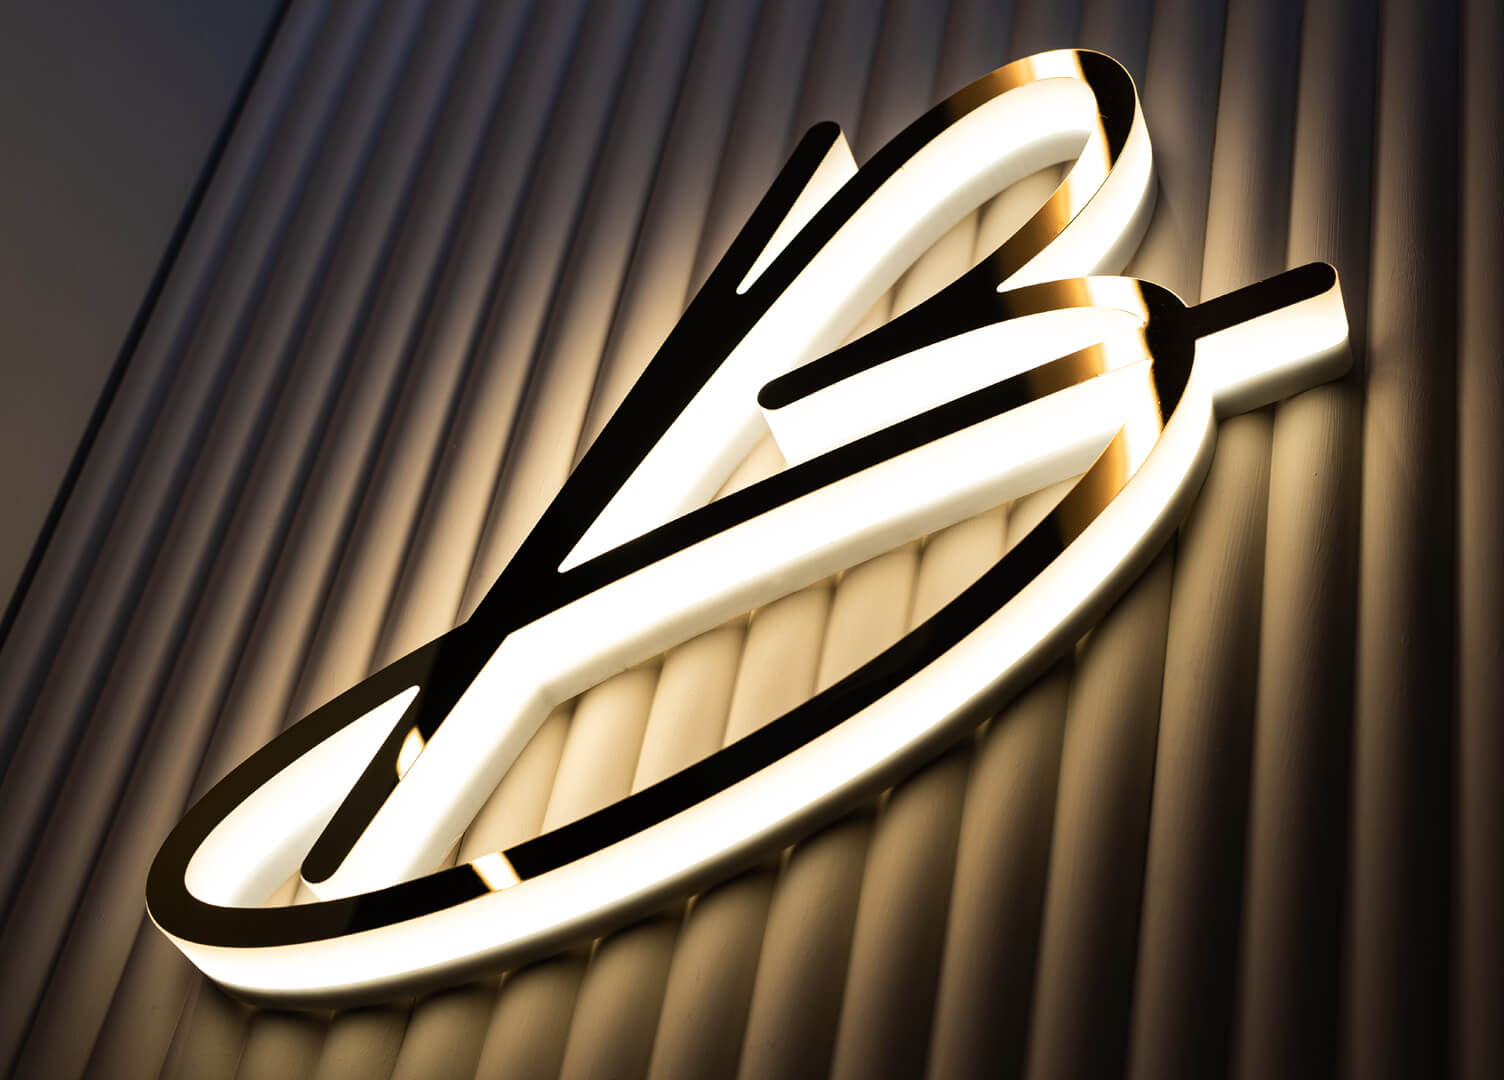 Blushington Lettera B - Lettera B con logo Blushington in oro, illuminata lungo il profilo LED